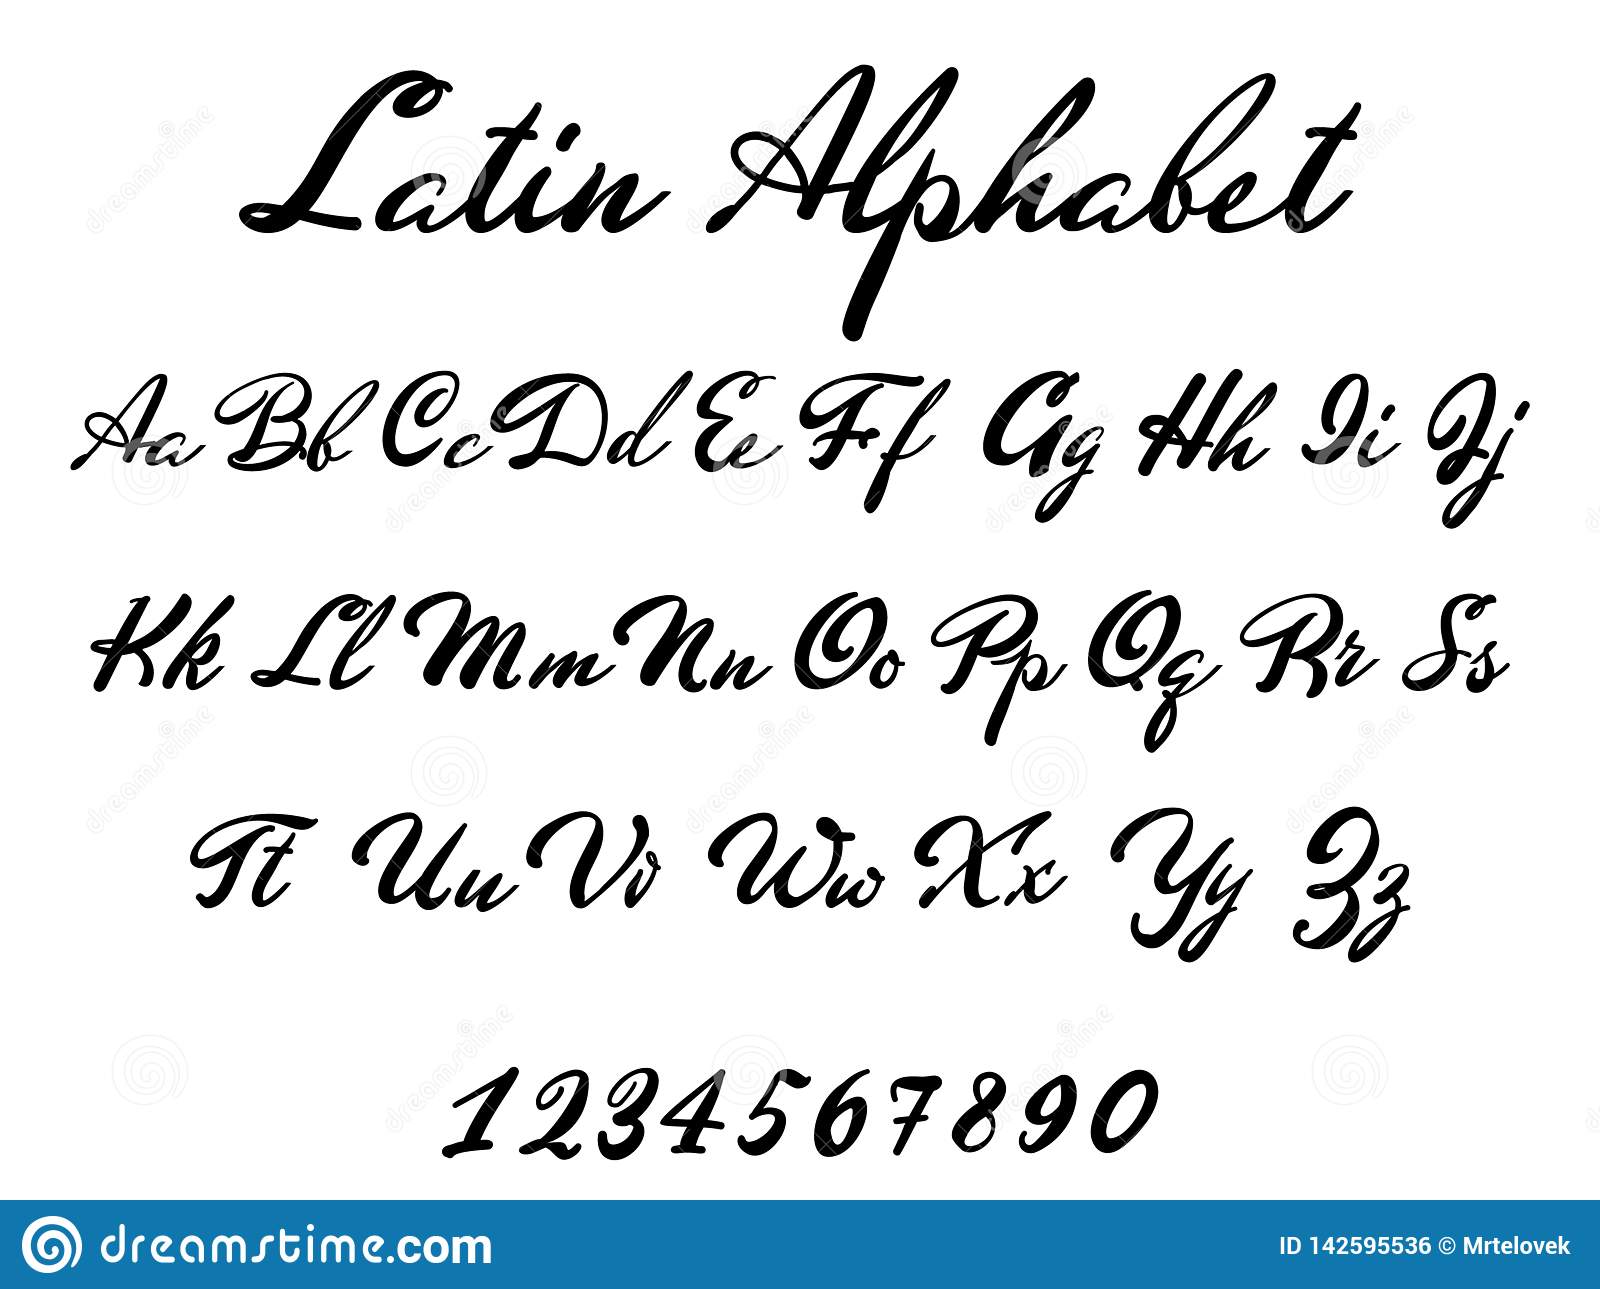 Font Latin